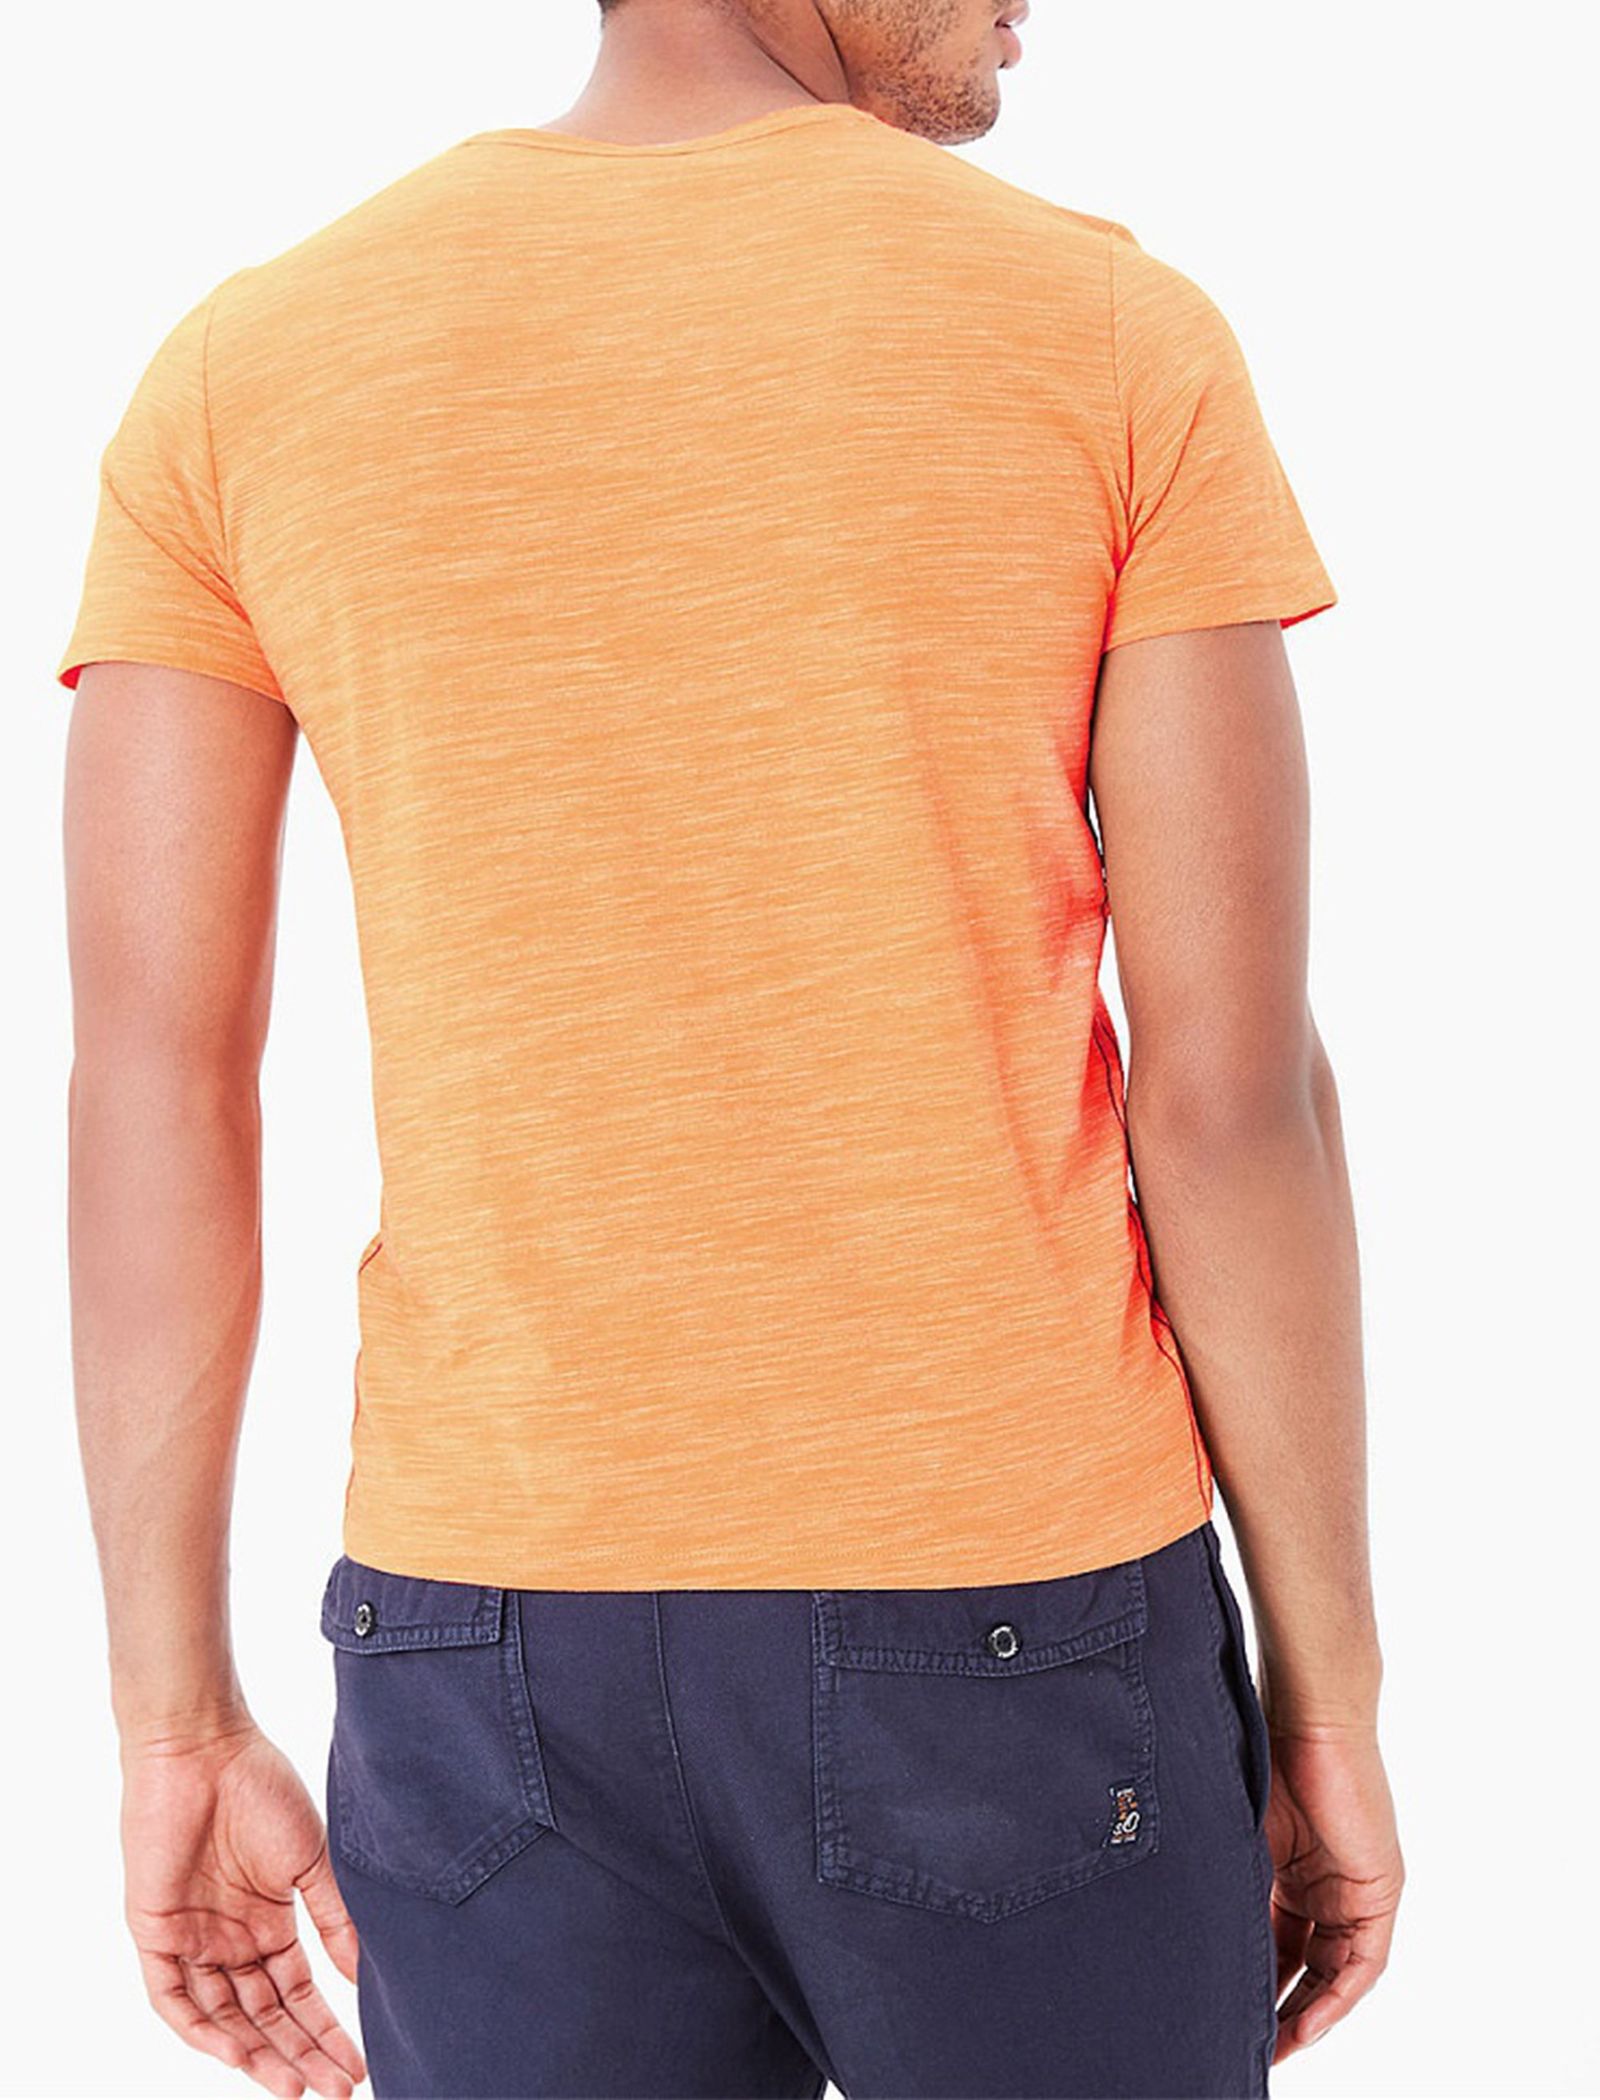 تی شرت نخی یقه هفت مردانه - اس.اولیور - نارنجي روشن - 3